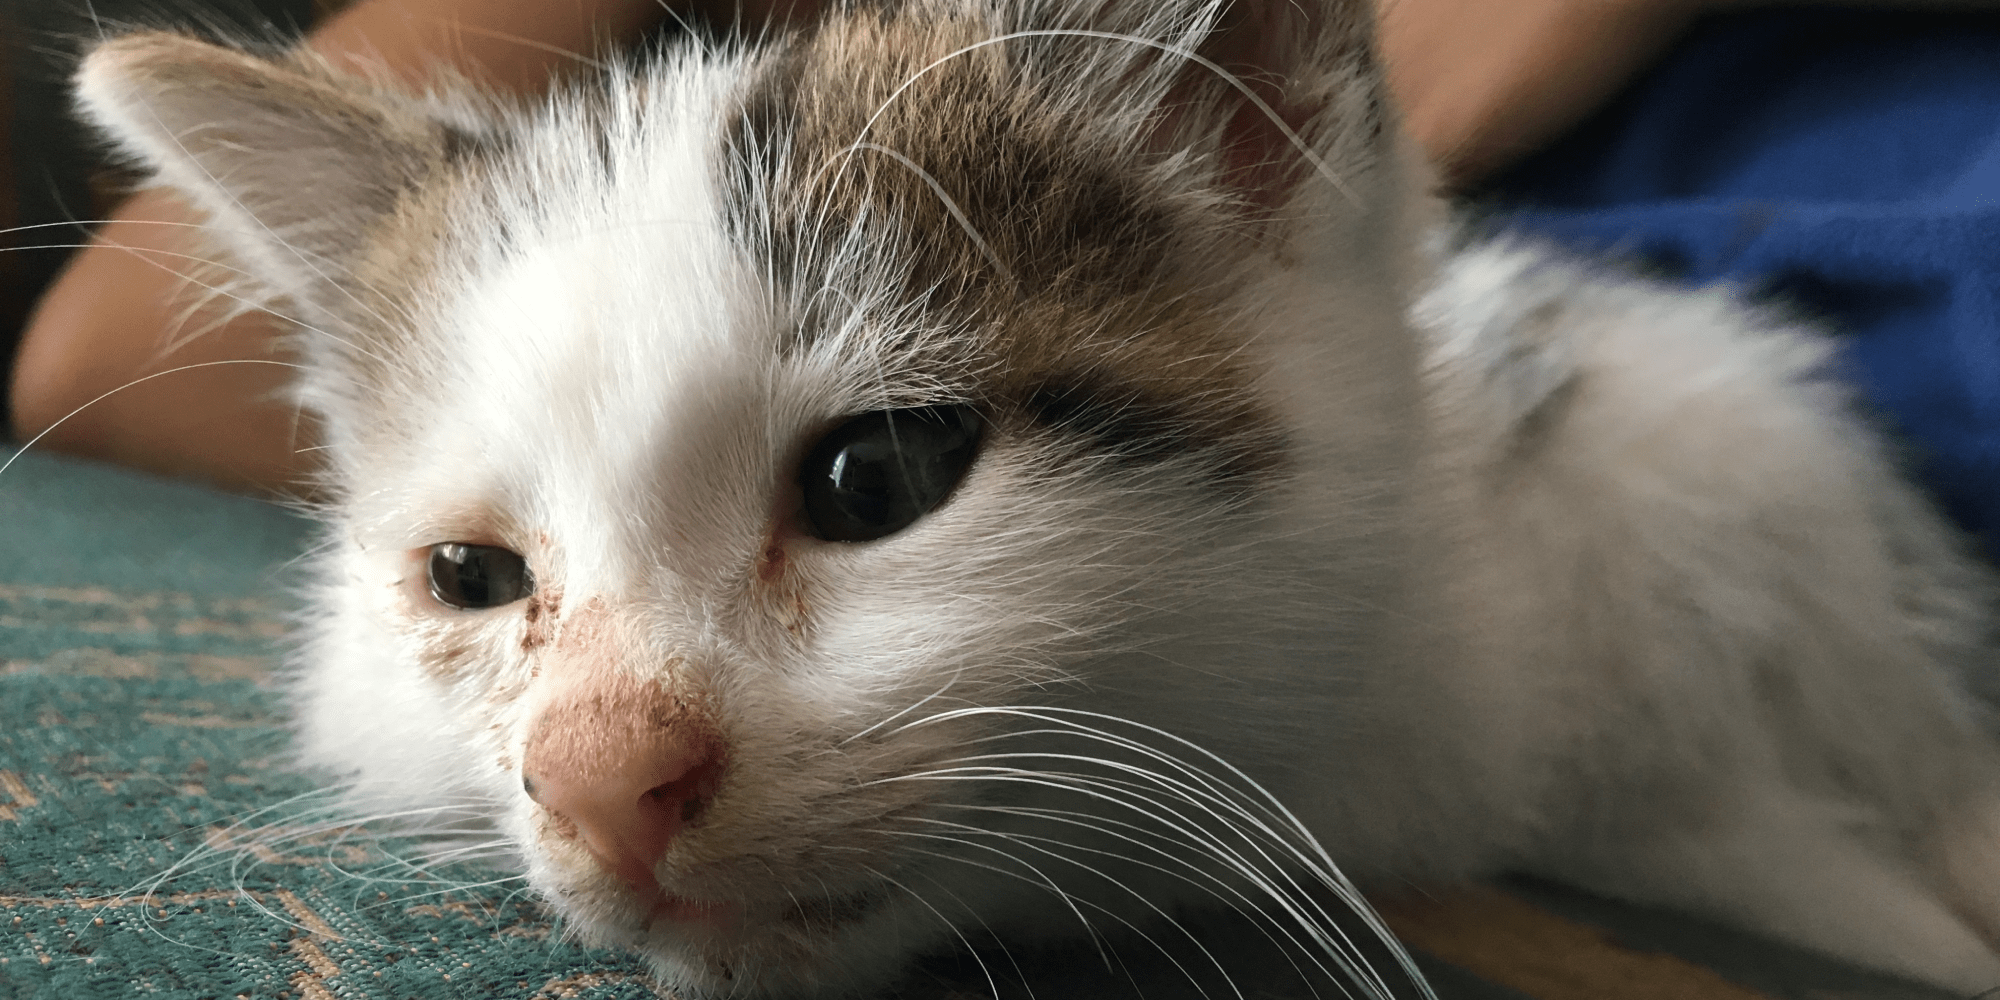 A photo of a cat with flu-like symptoms